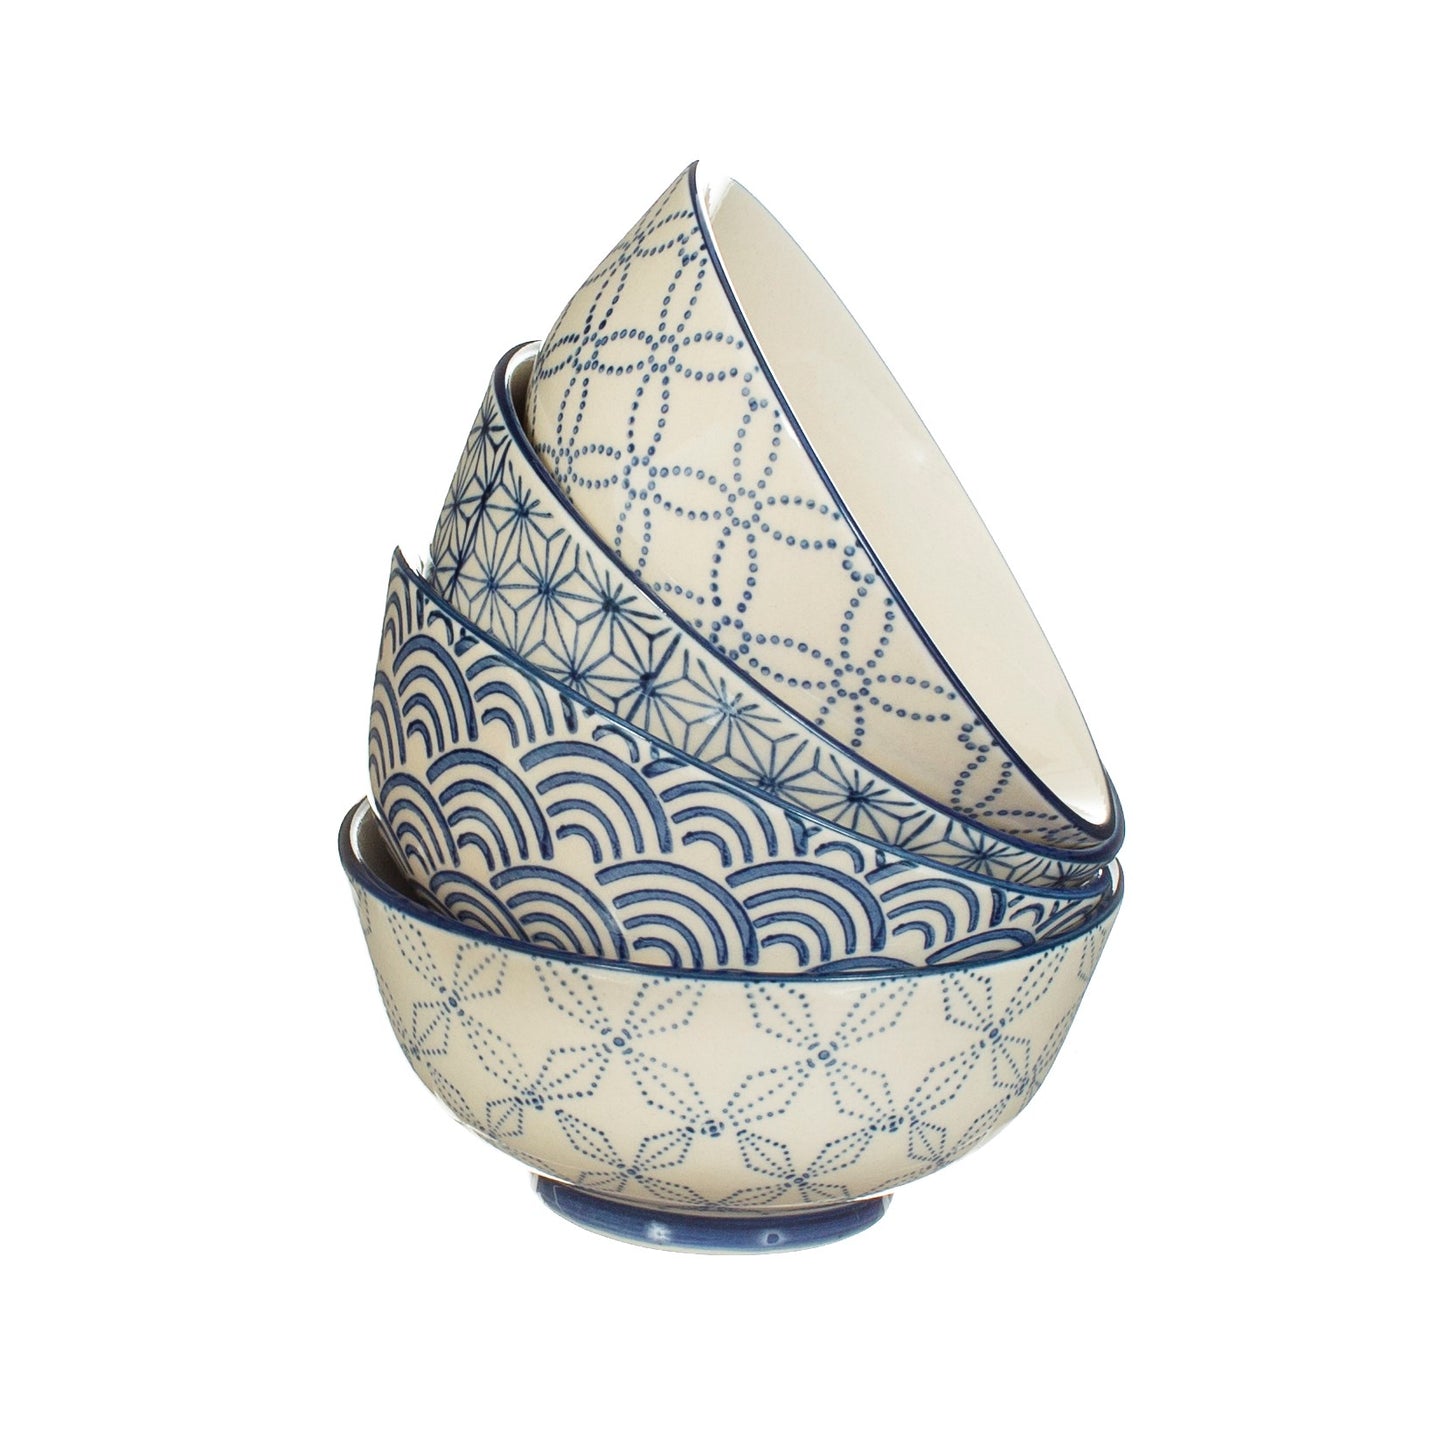 Sashiko Patterned Bowls - 4 designs available